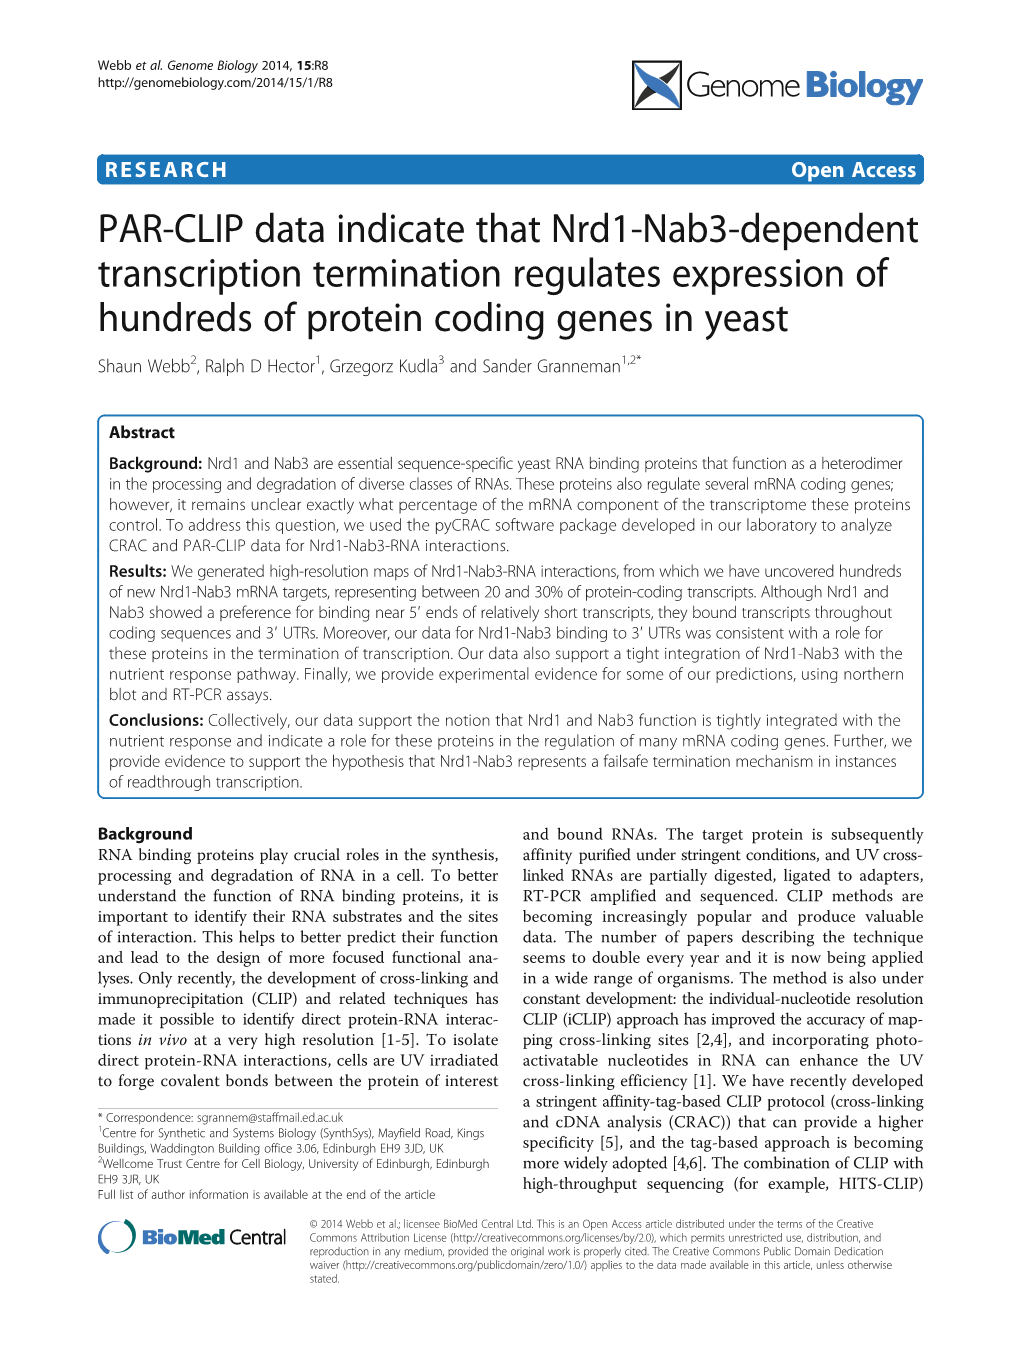 PAR-CLIP Data Indicate That Nrd1-Nab3